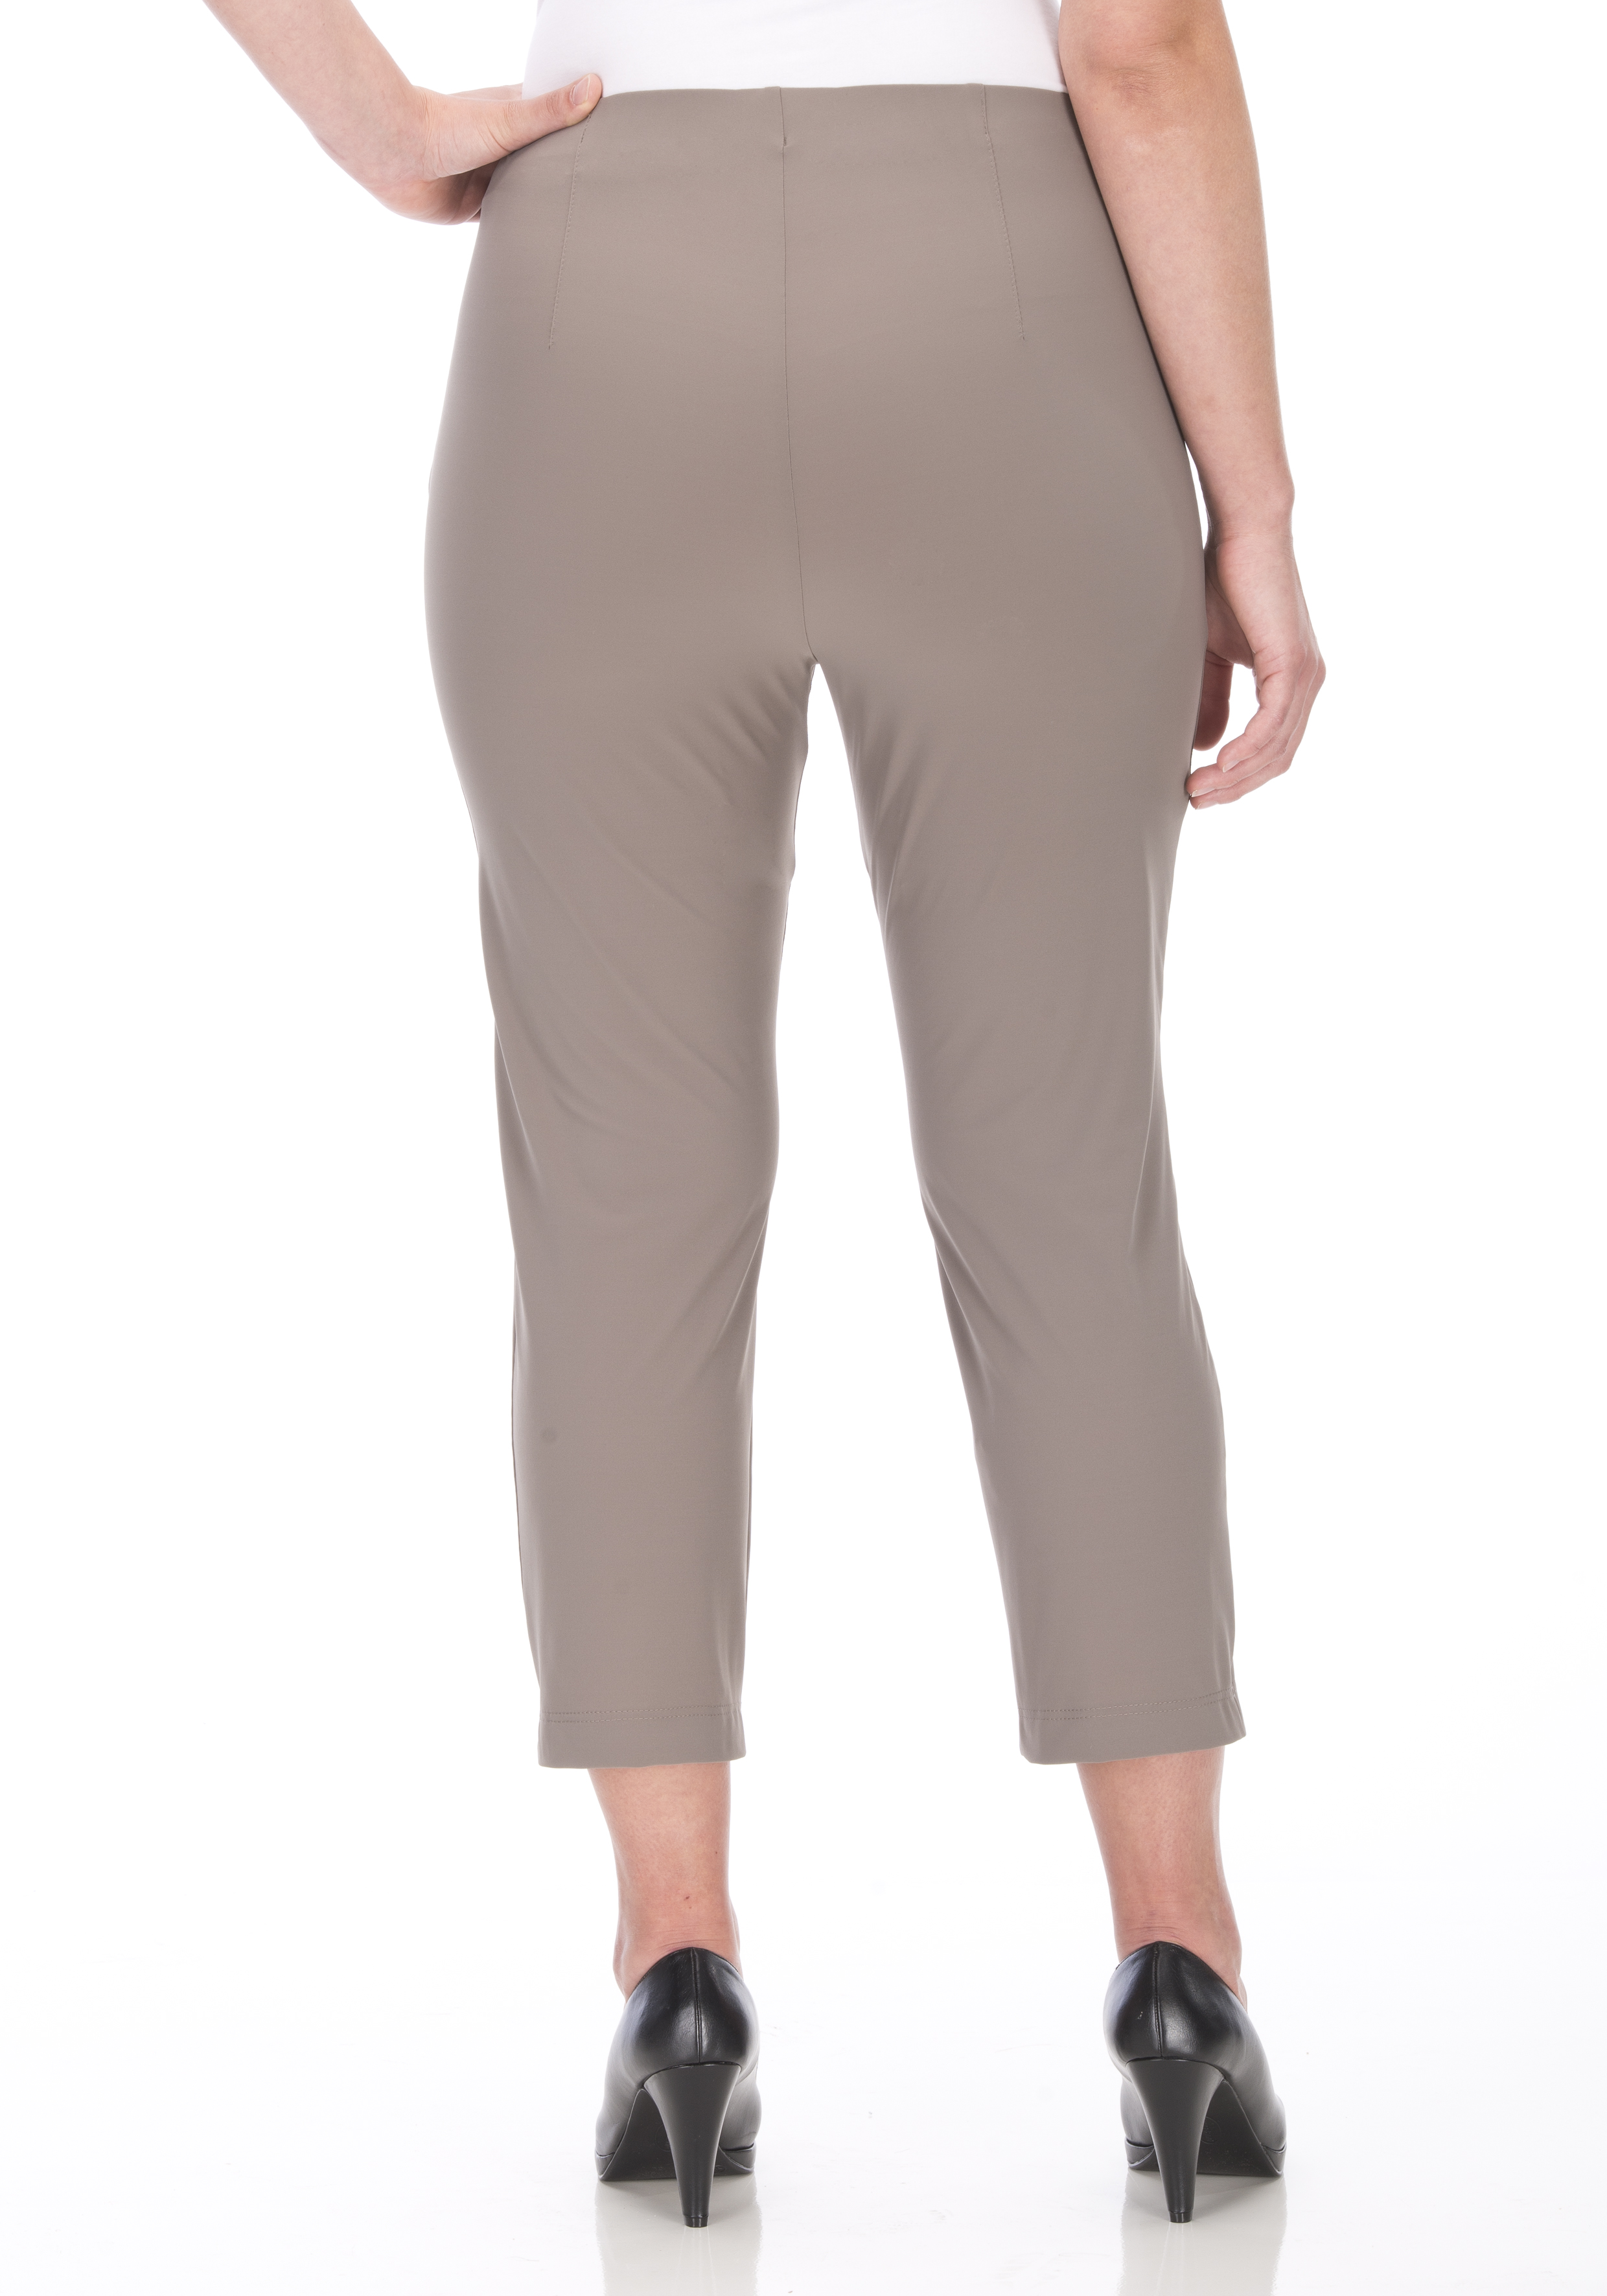 - Curvy KjBRAND by Summer SUSIE BiNA 7/8 Sensitive Trousers plus size